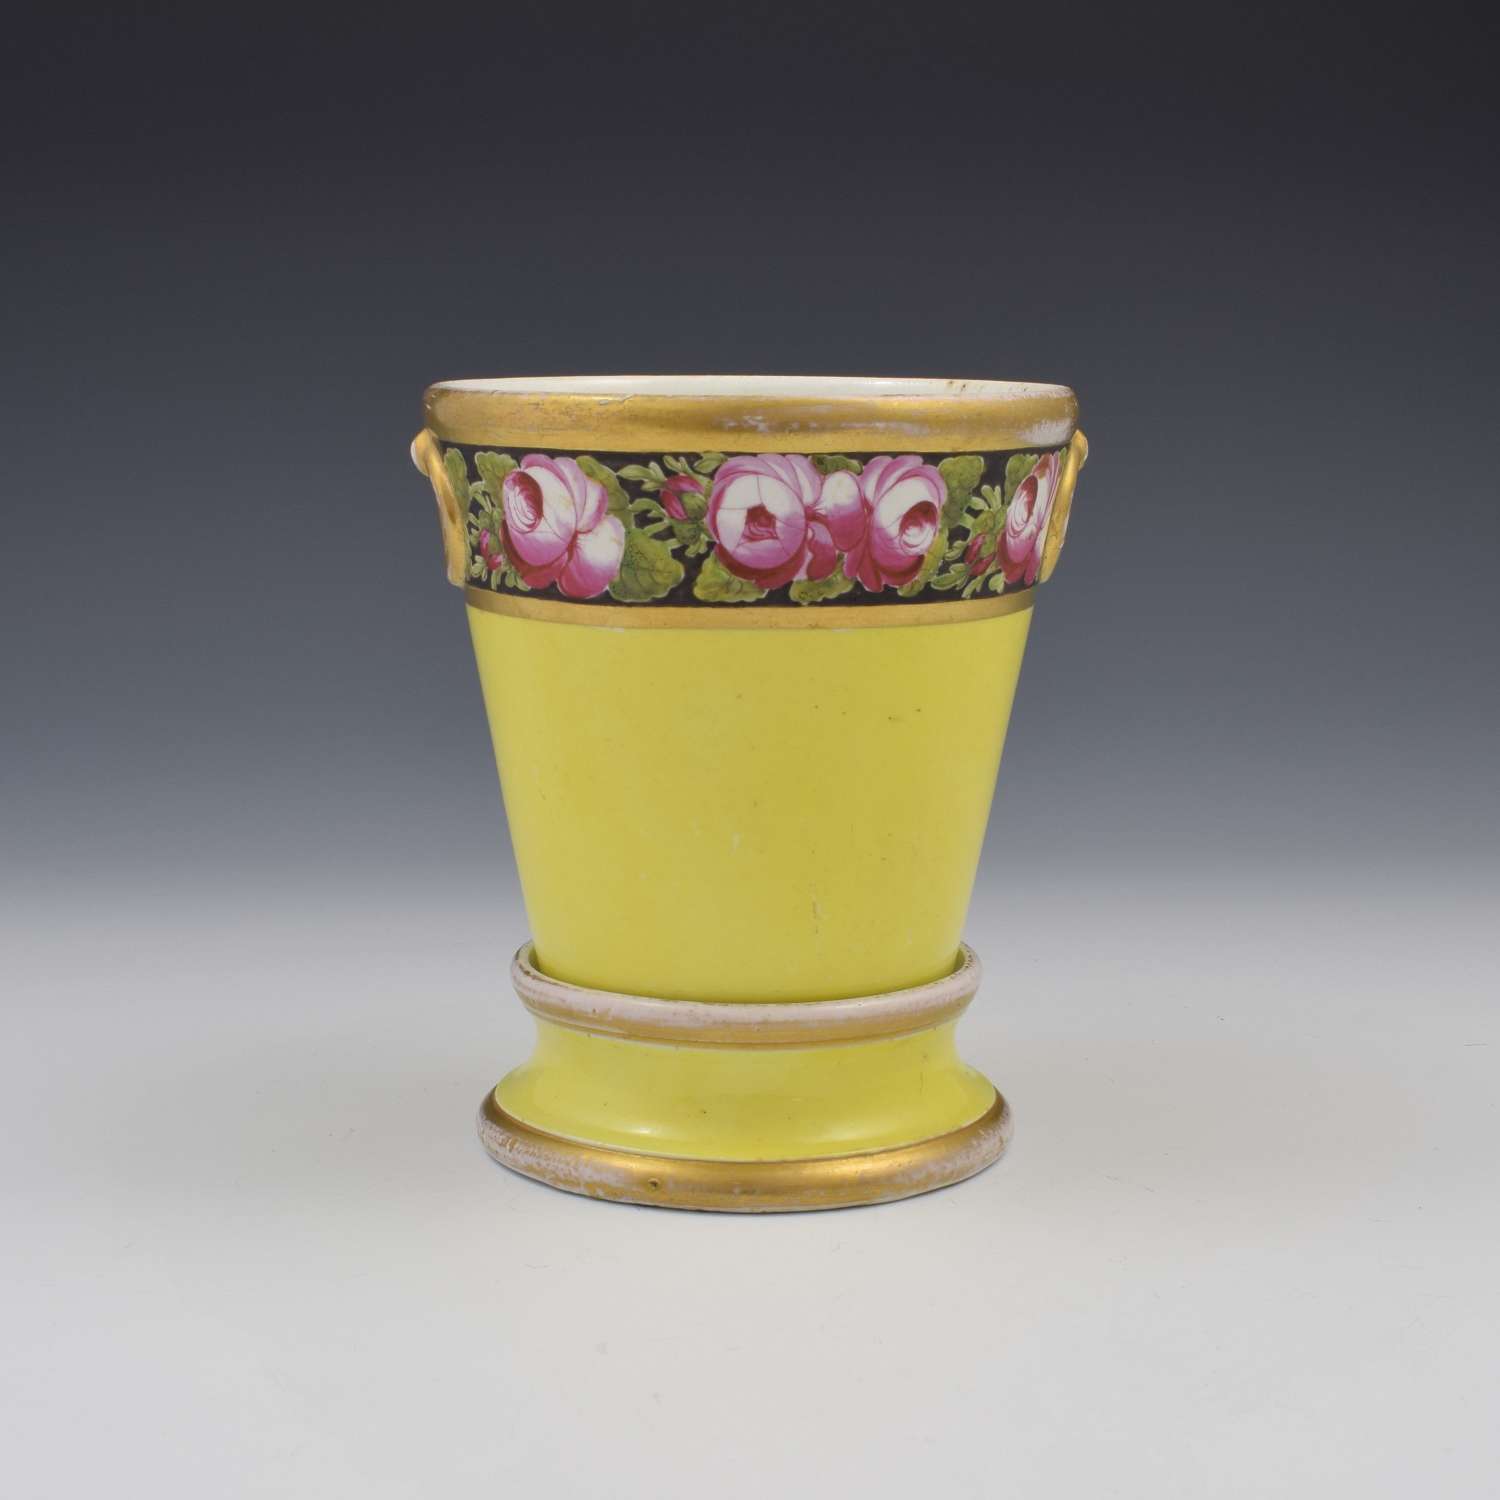 Early Coalport Porcelain Jardiniere / Flower Pot & Stand c.1800-1810